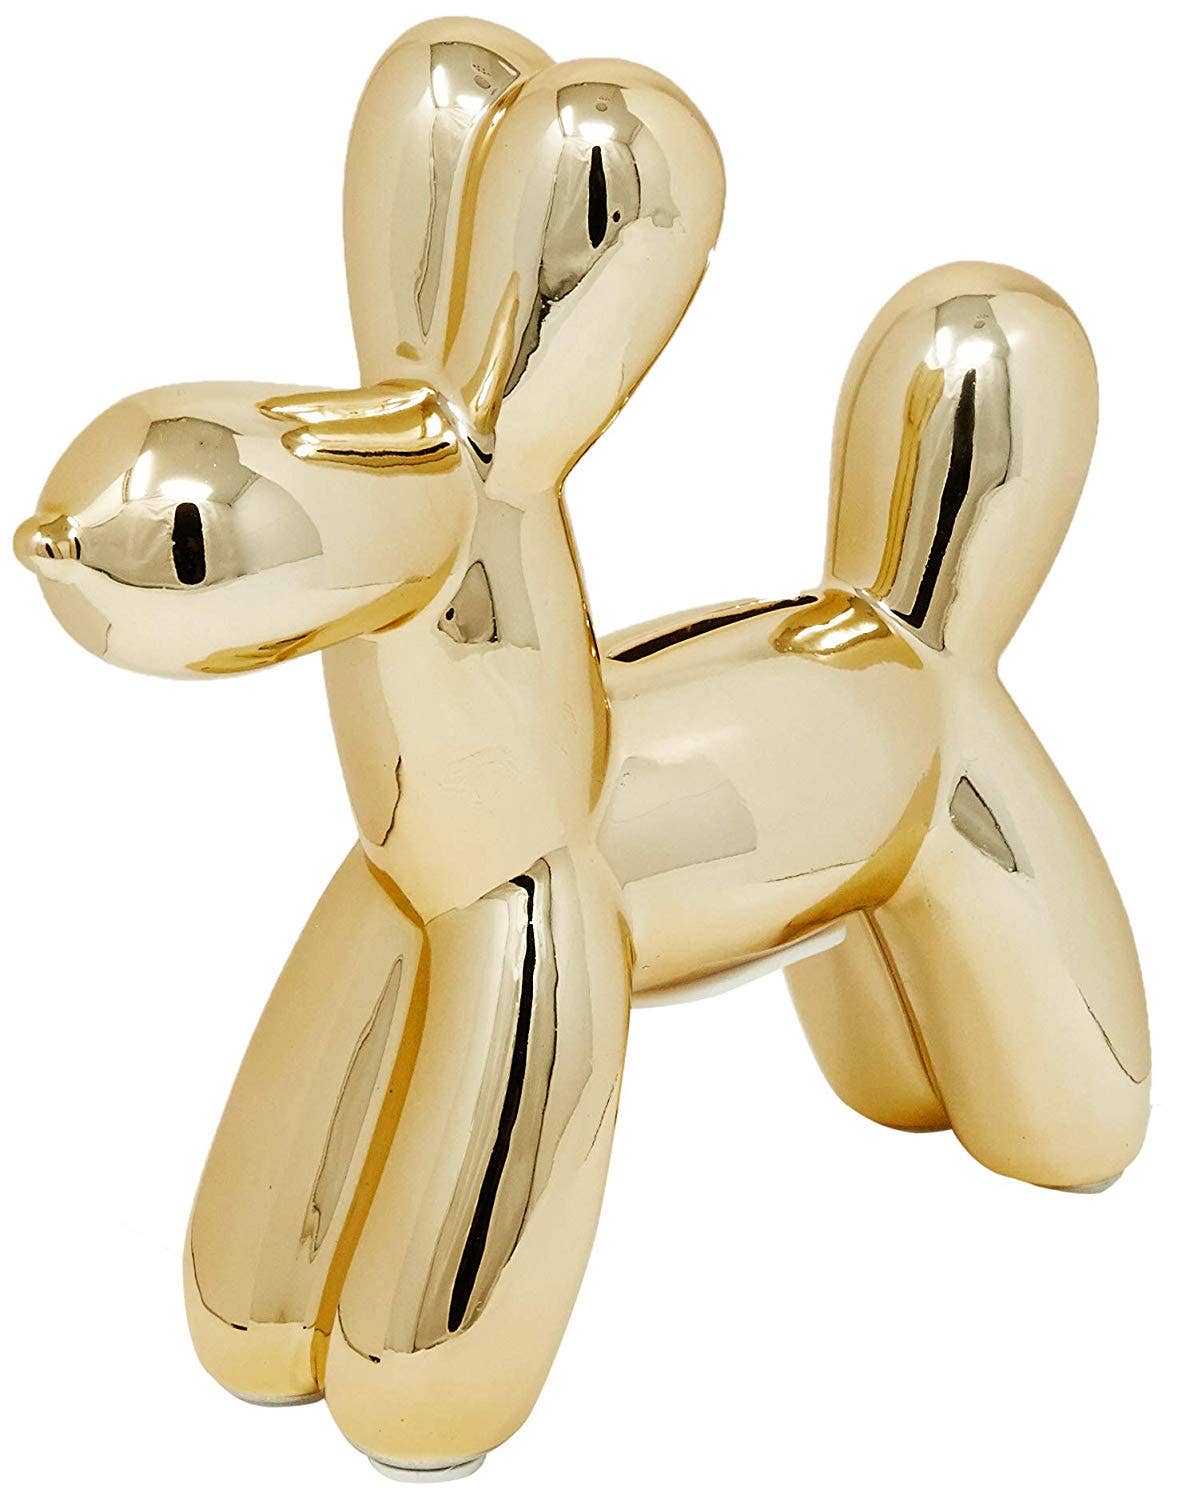 Gold Balloon Dog Bank - 12" - Twinkle Twinkle Little One